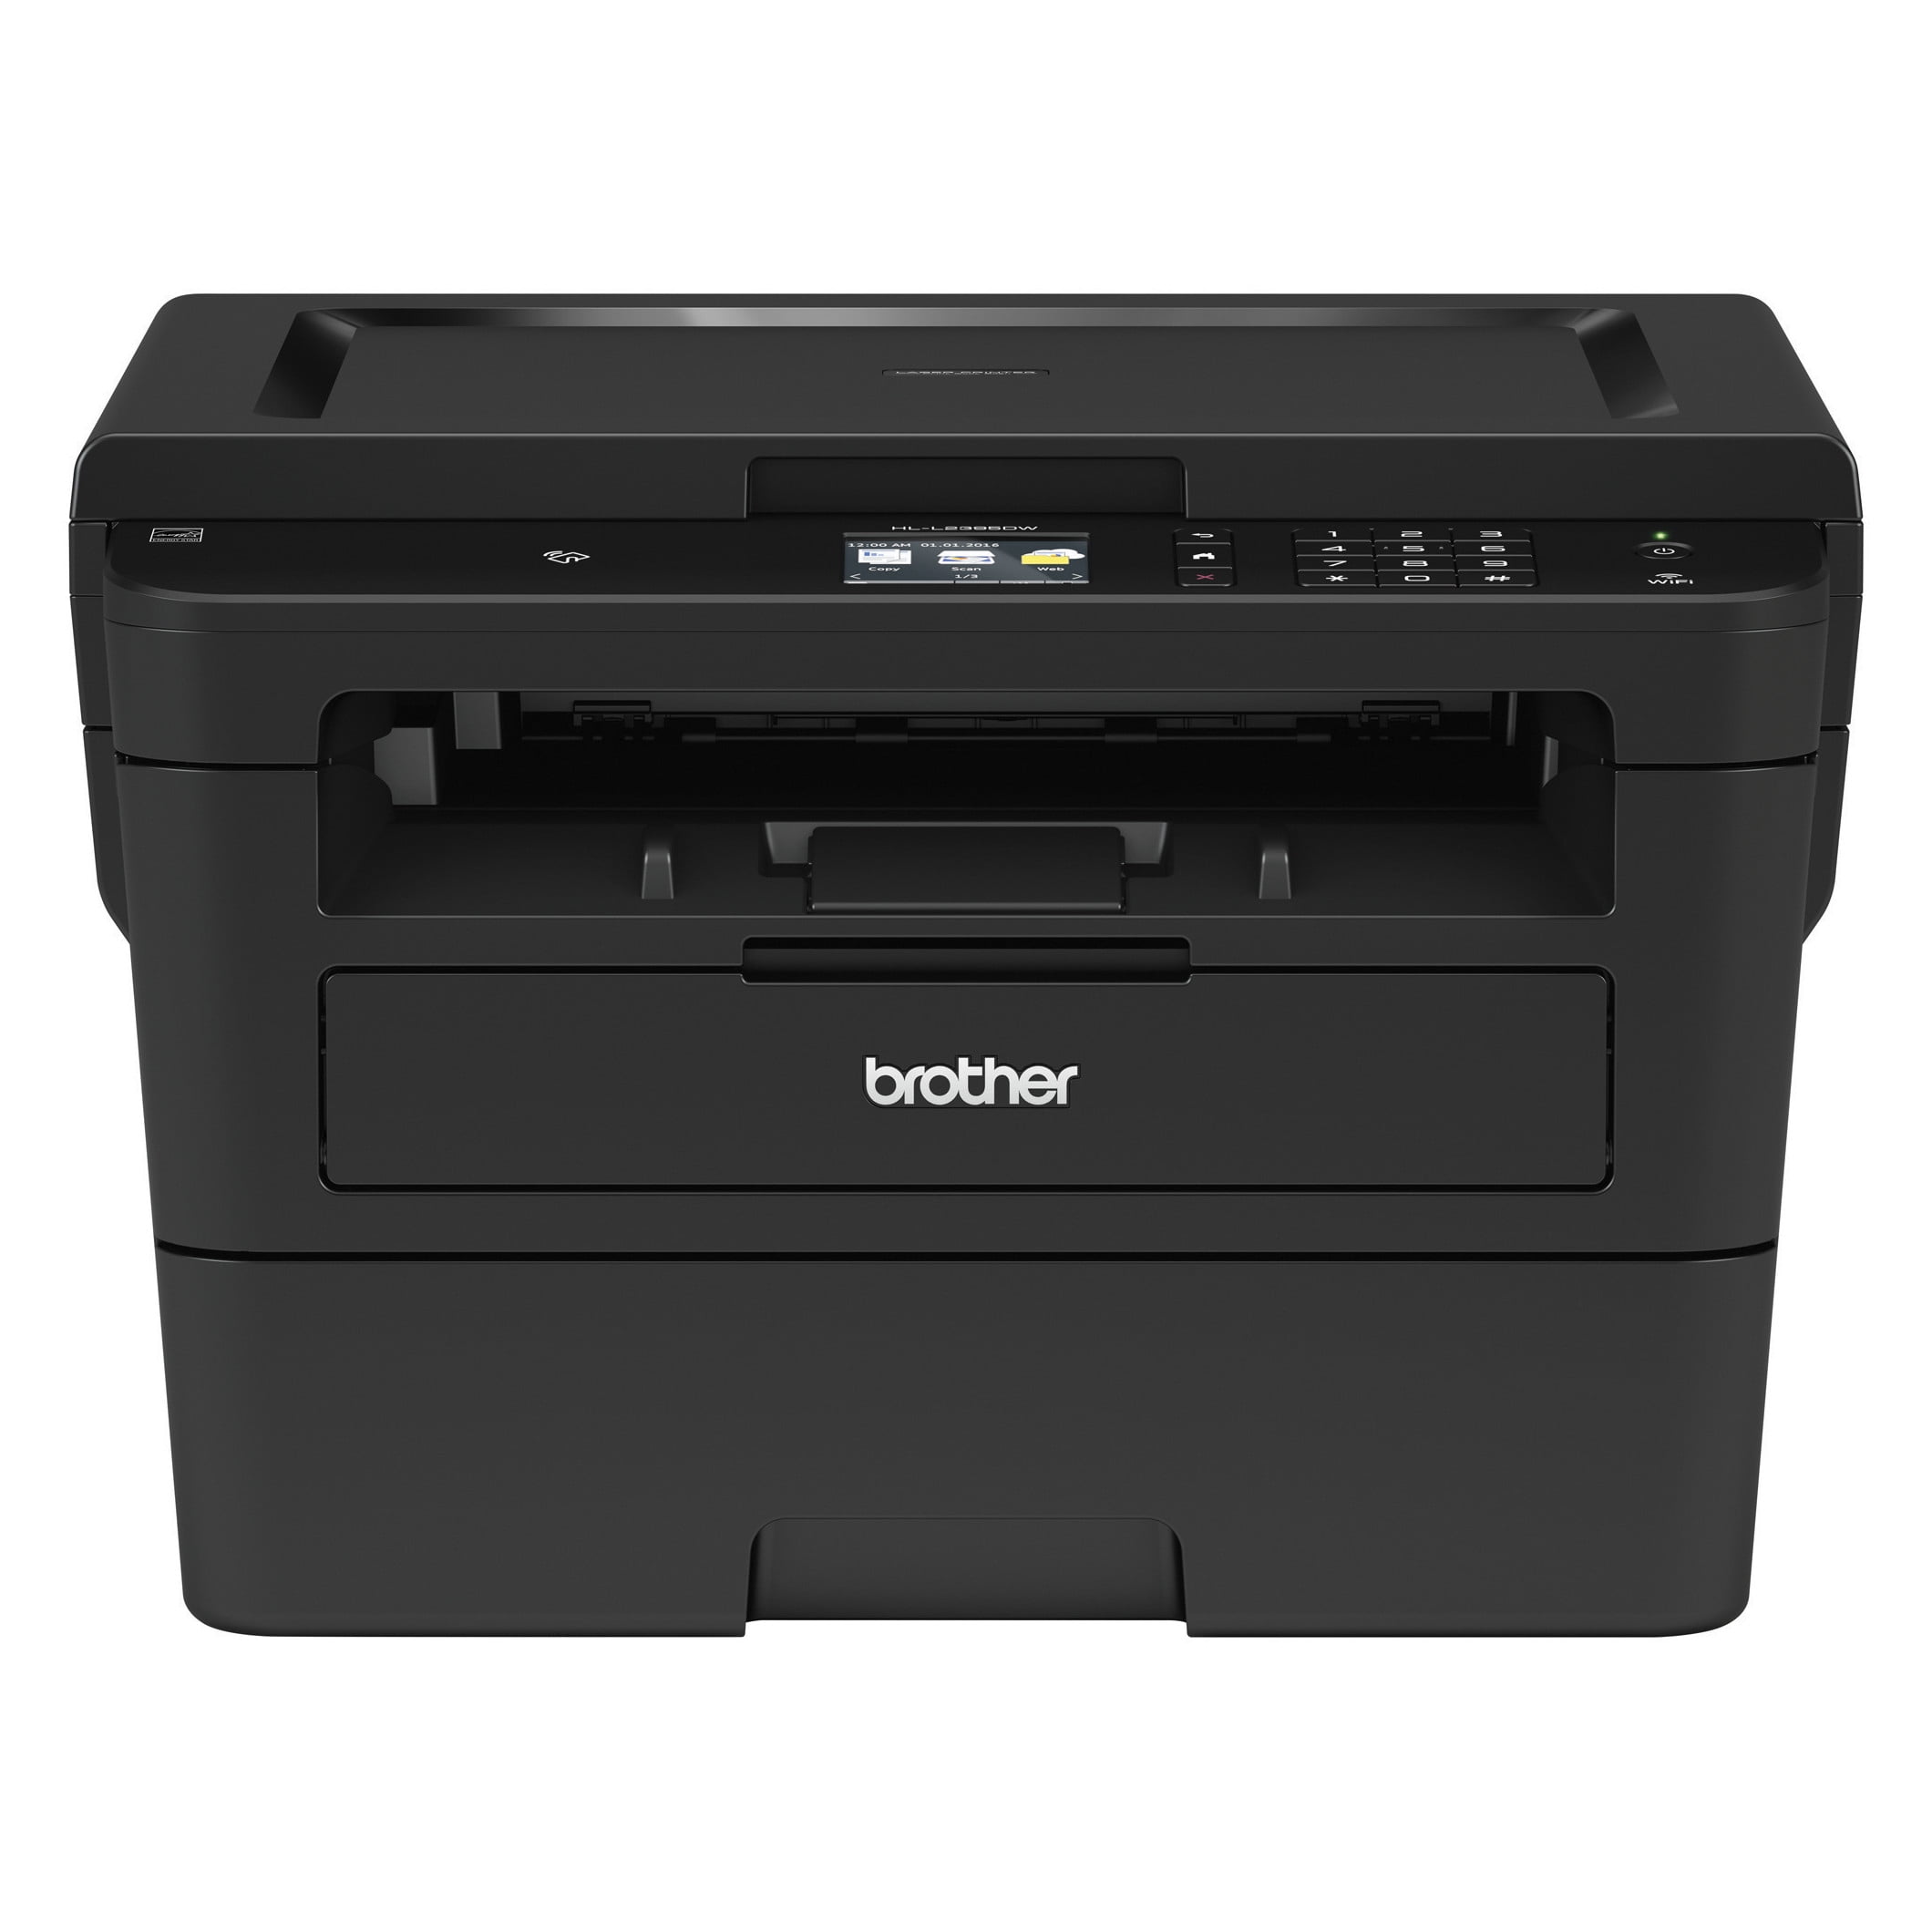 Brother HL-L2395DW Monochrome Laser Printer, Convenient Flatbed